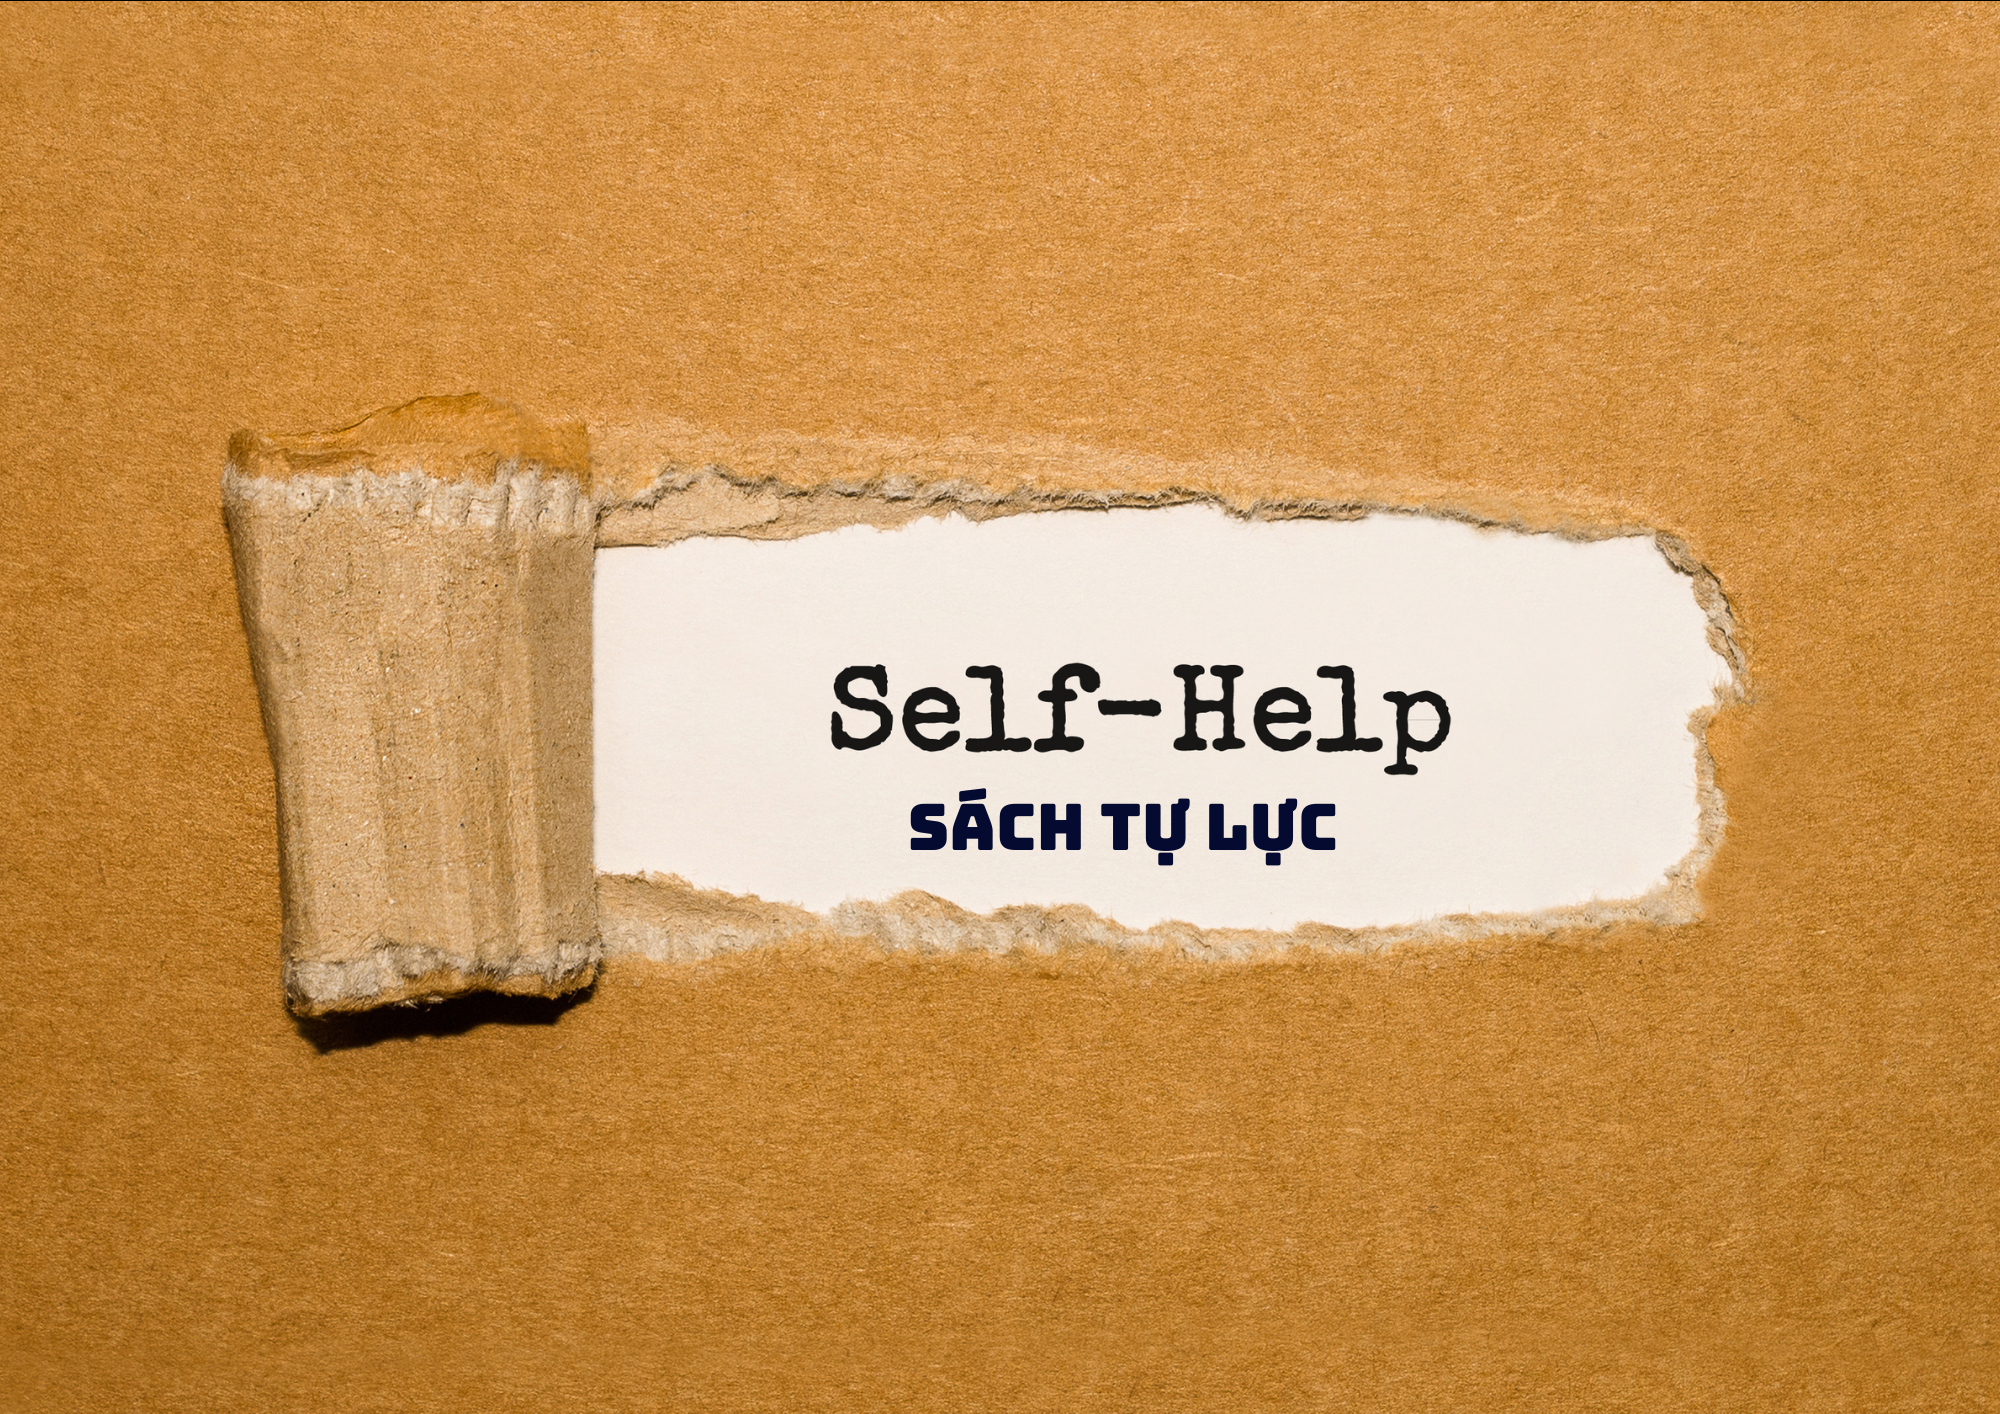 tu-vung-chu-de-sach-books-trong-ielts-speaking-phan-2-self-help